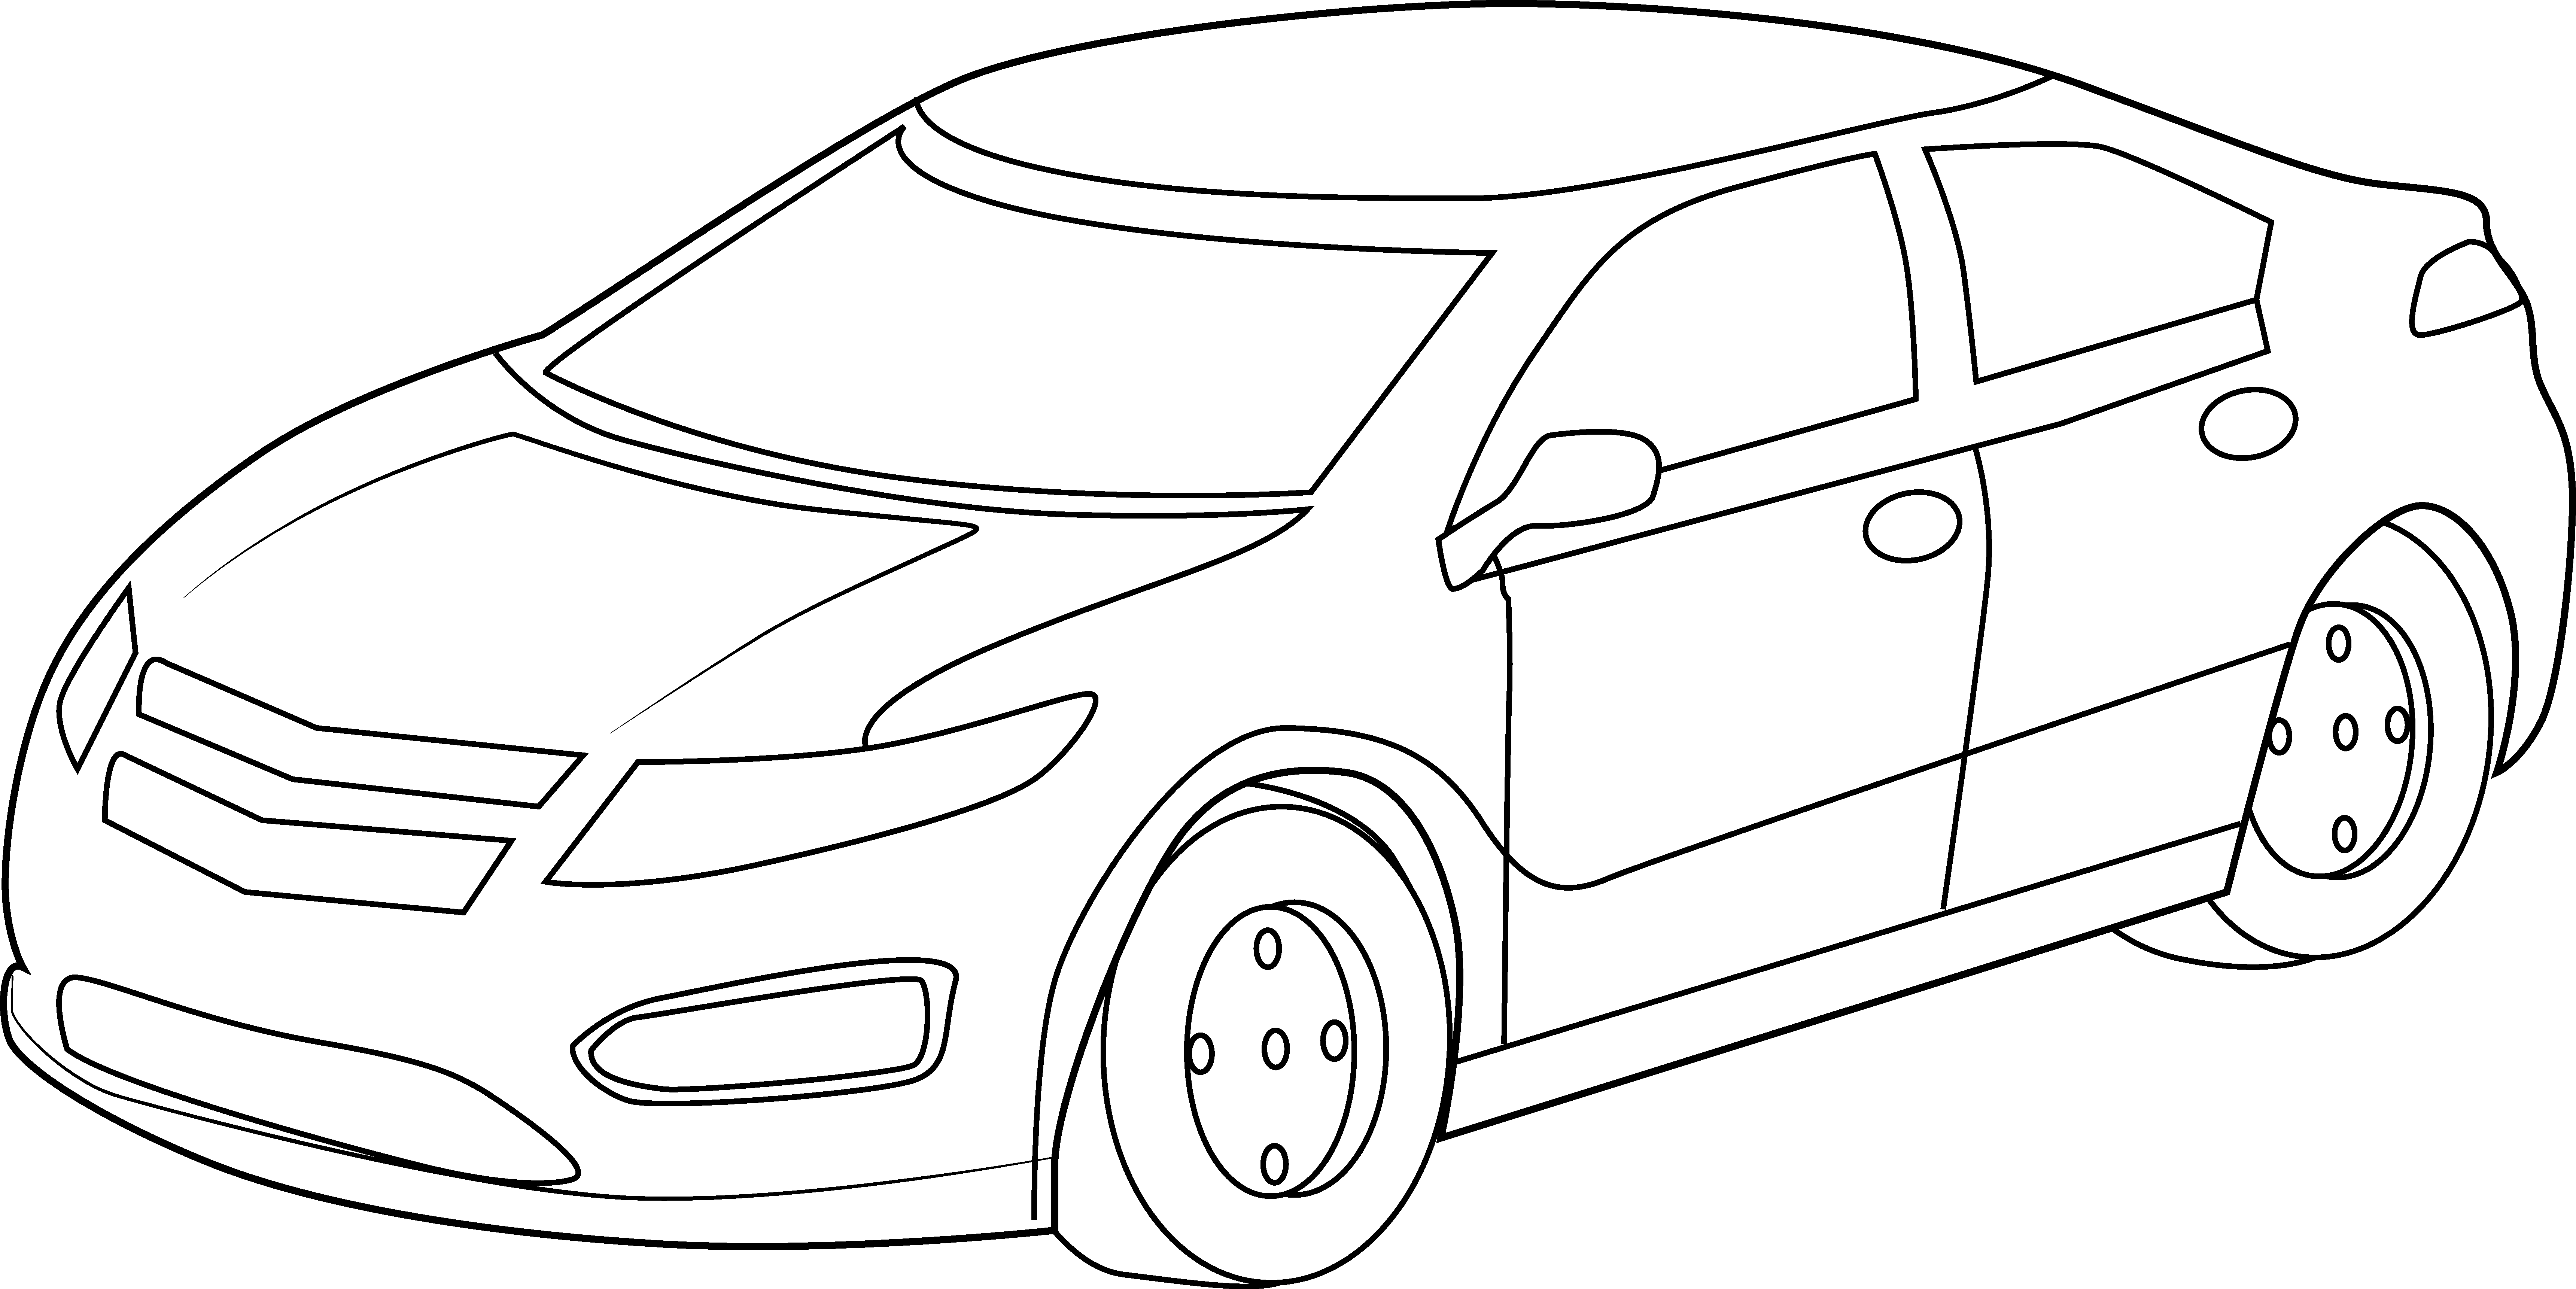 Dibujo para colorear: Sports car / Tuning (Transporte) #147065 - Dibujos para Colorear e Imprimir Gratis